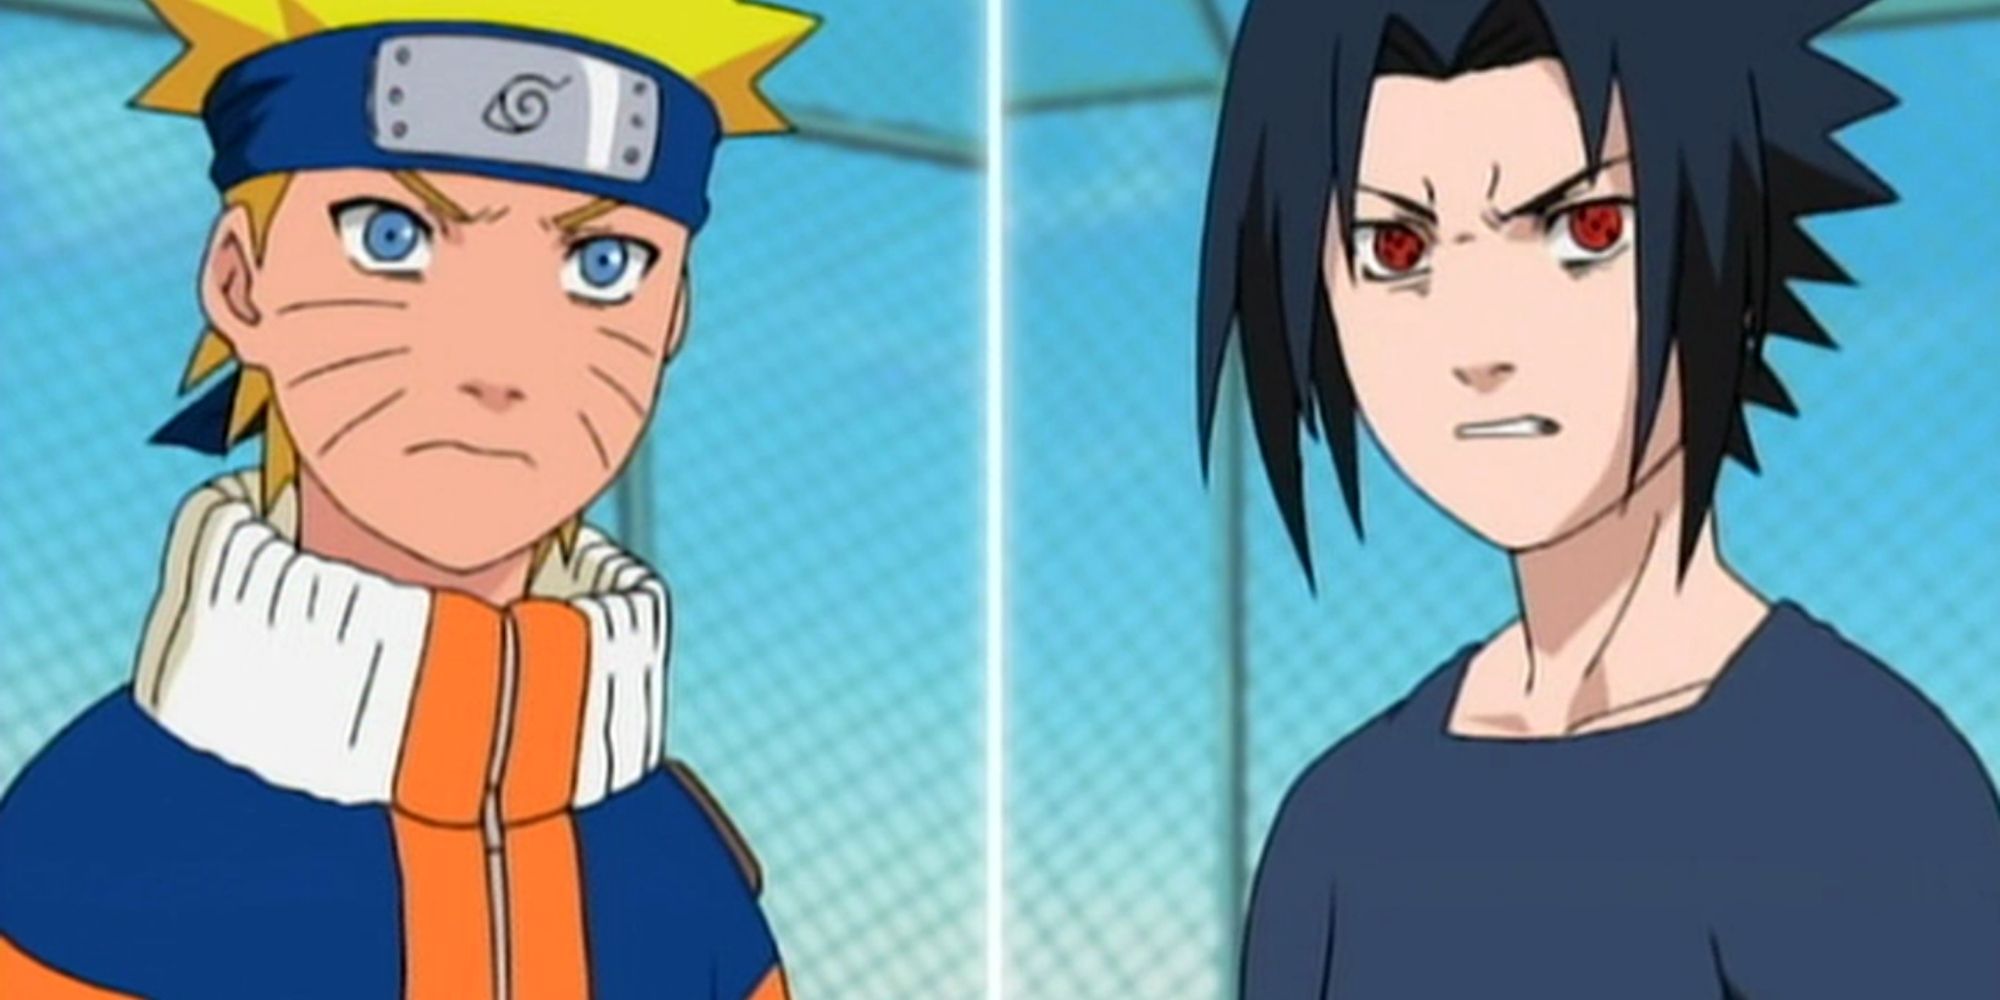 Naruto and Sasuke fight at the hospital